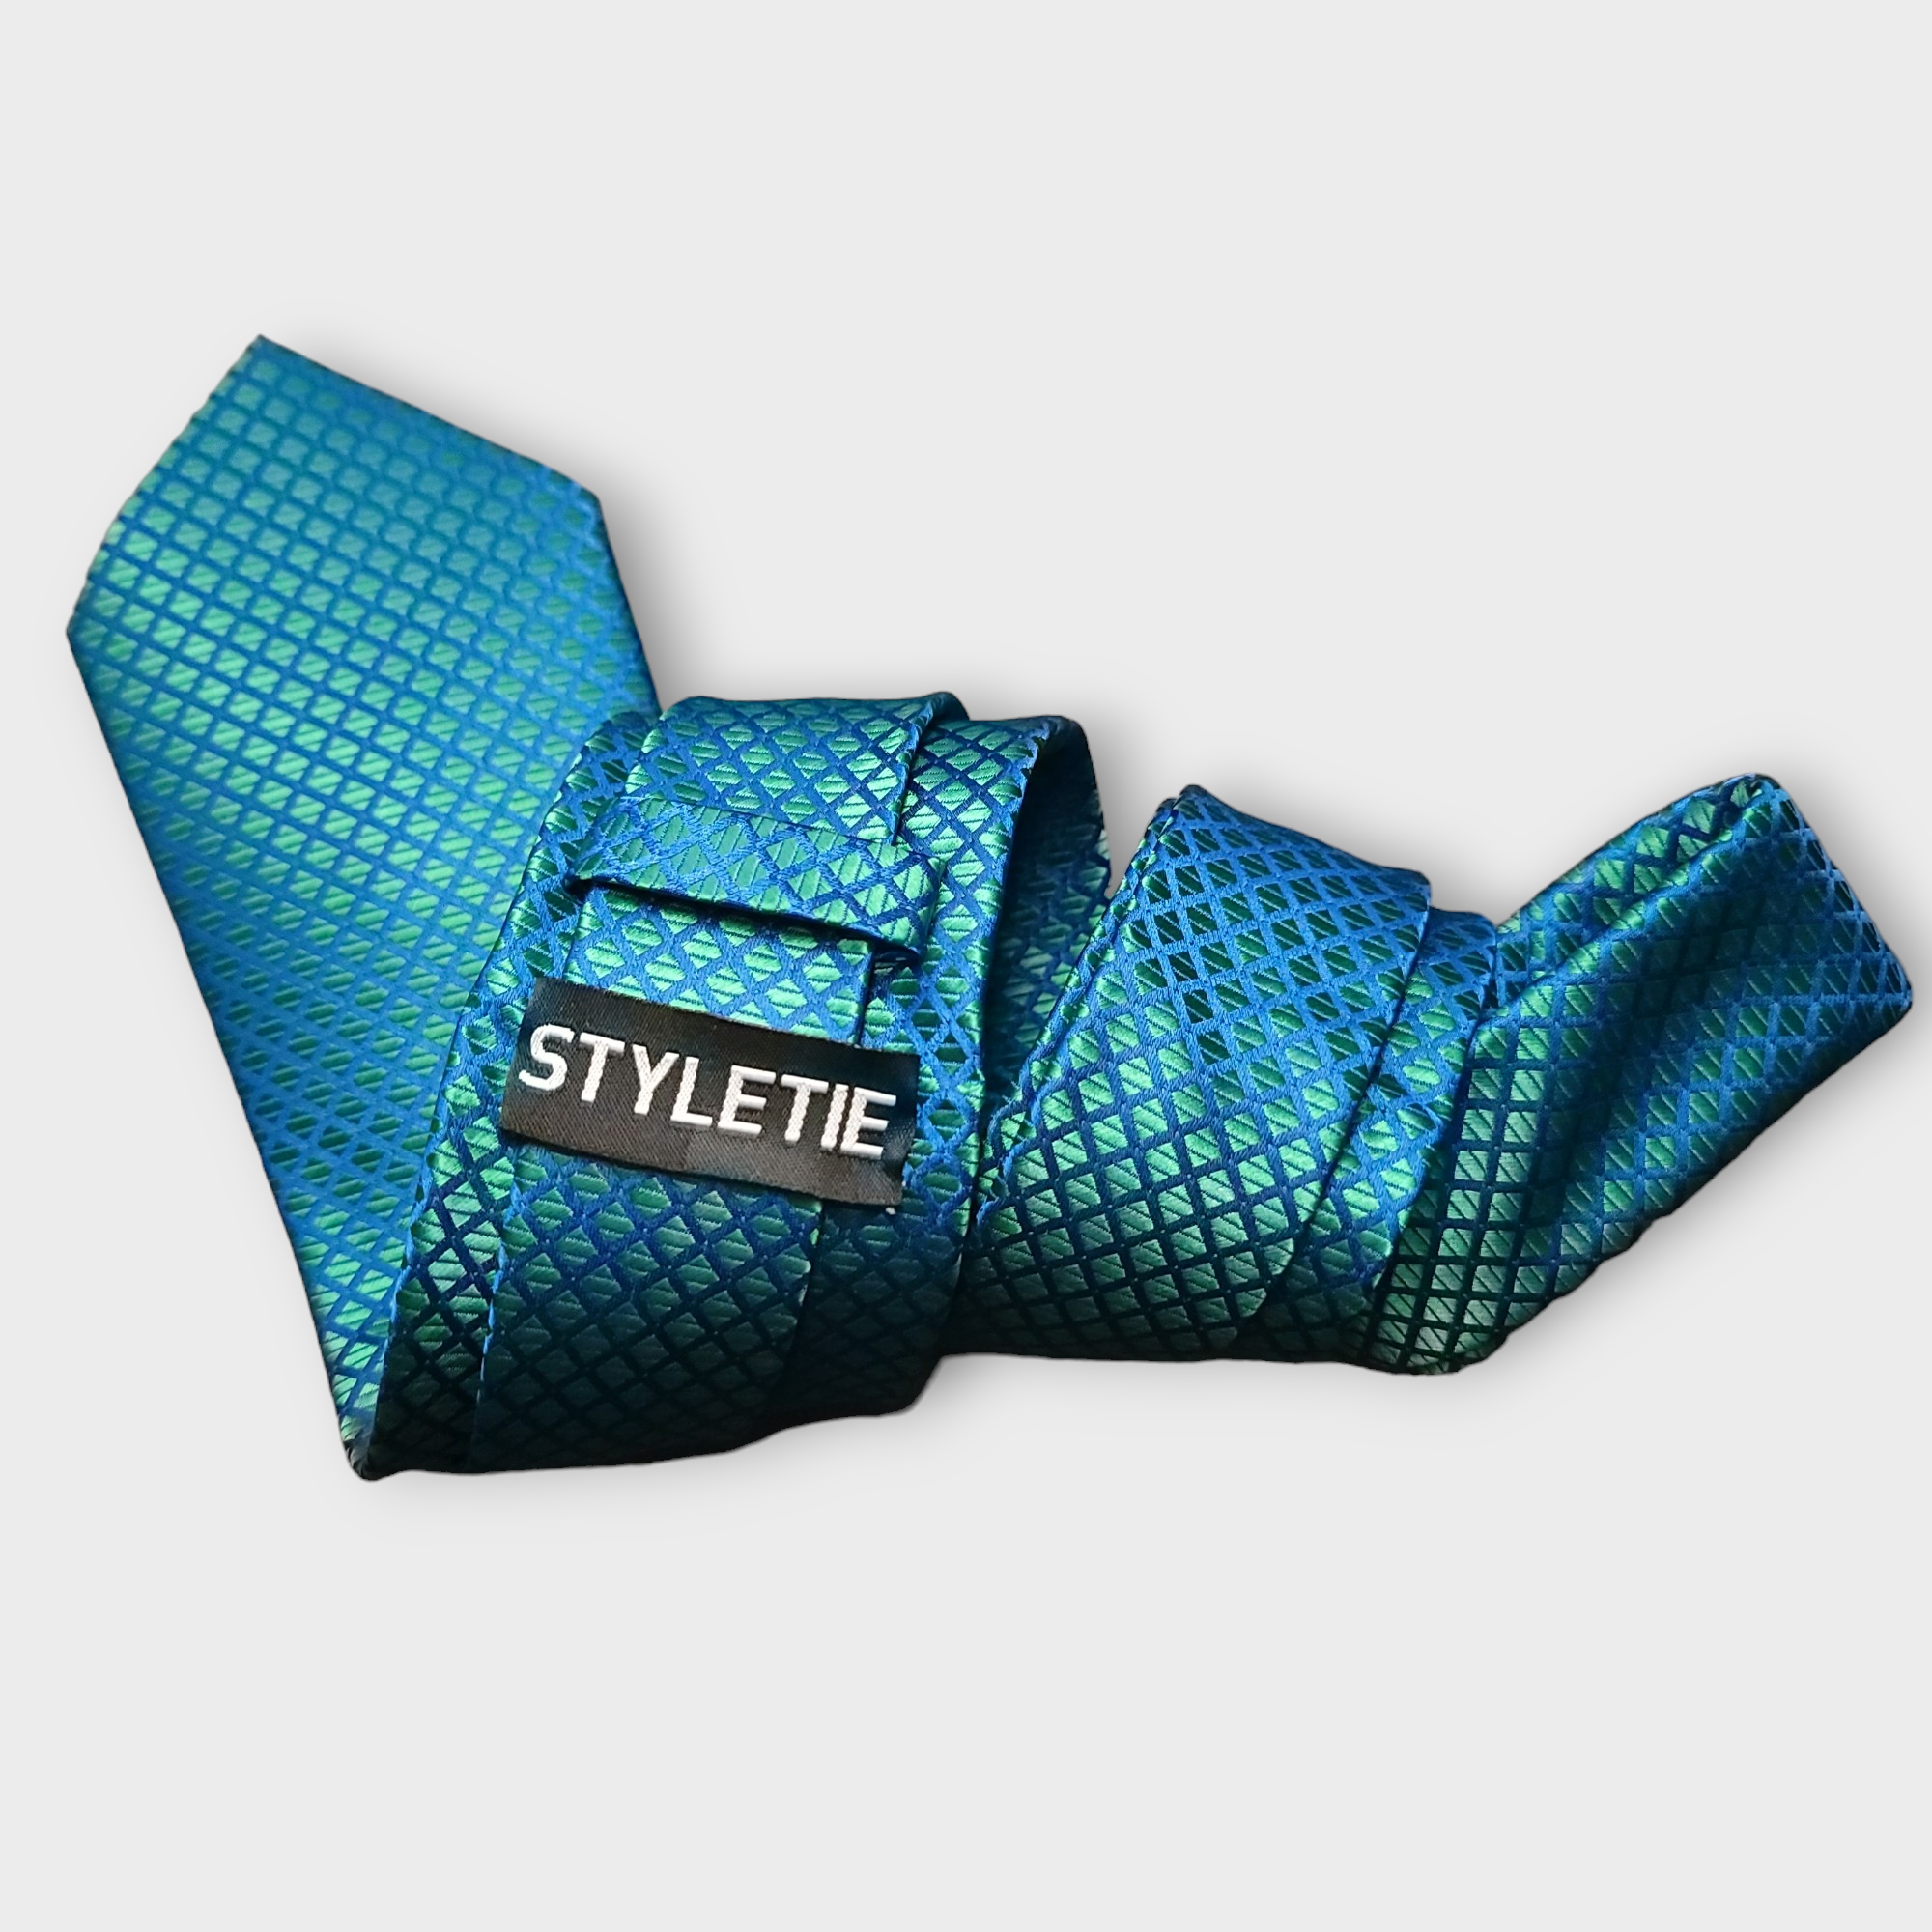 Blue & Emerald Green Silk Tie Pocket Square & Cufflinks Set